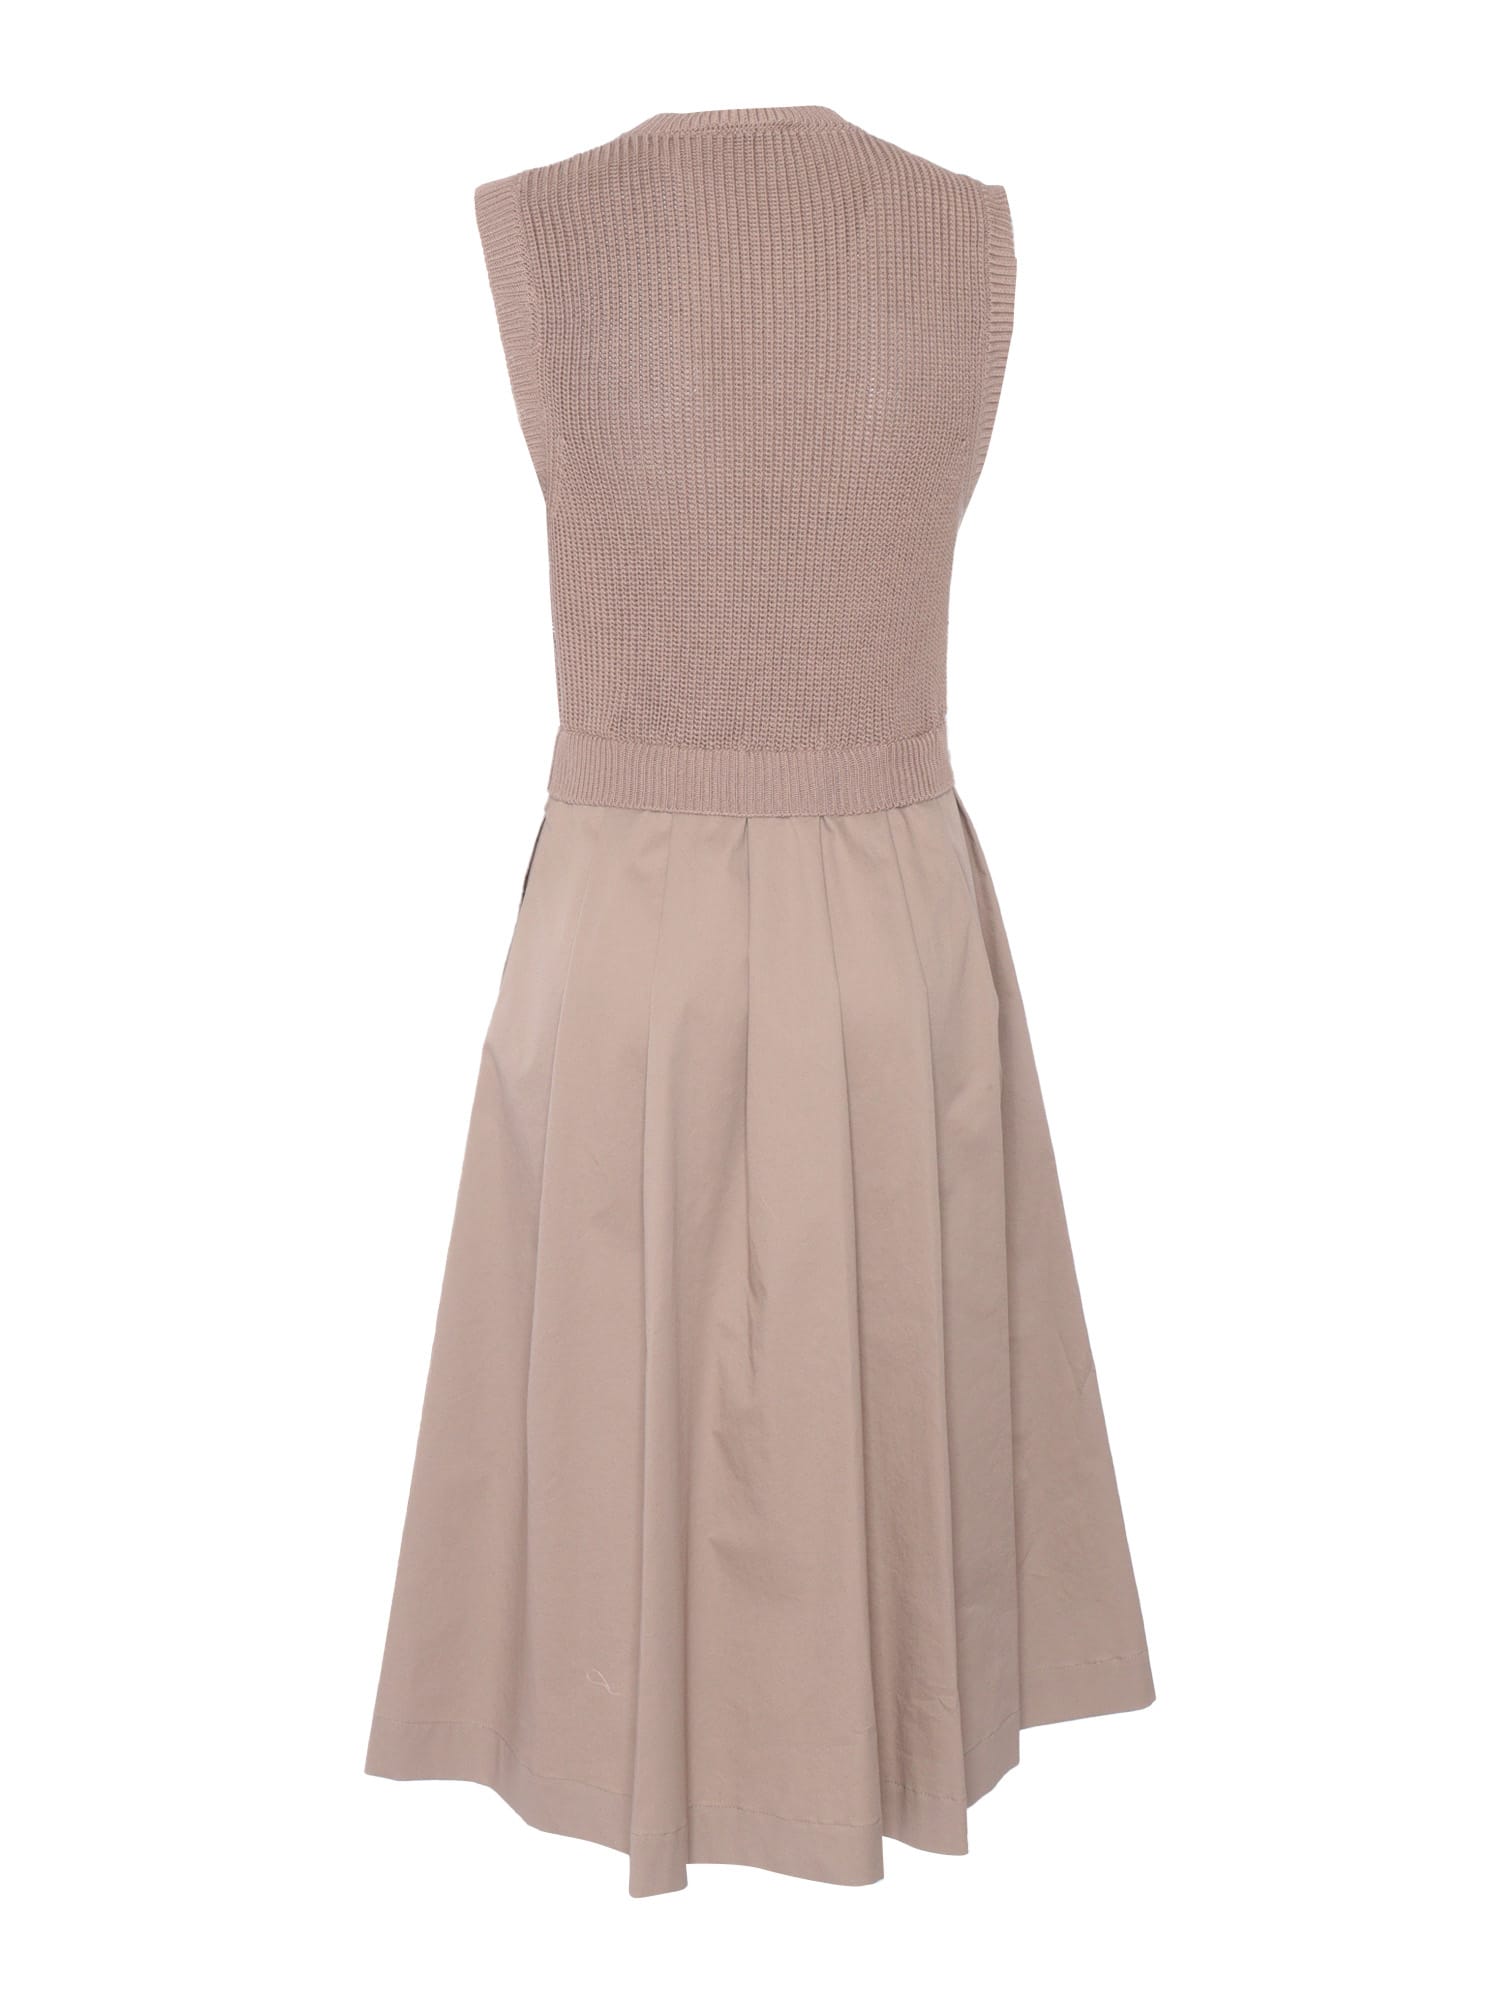 Shop Peserico Brown Cotton Tricot Dress